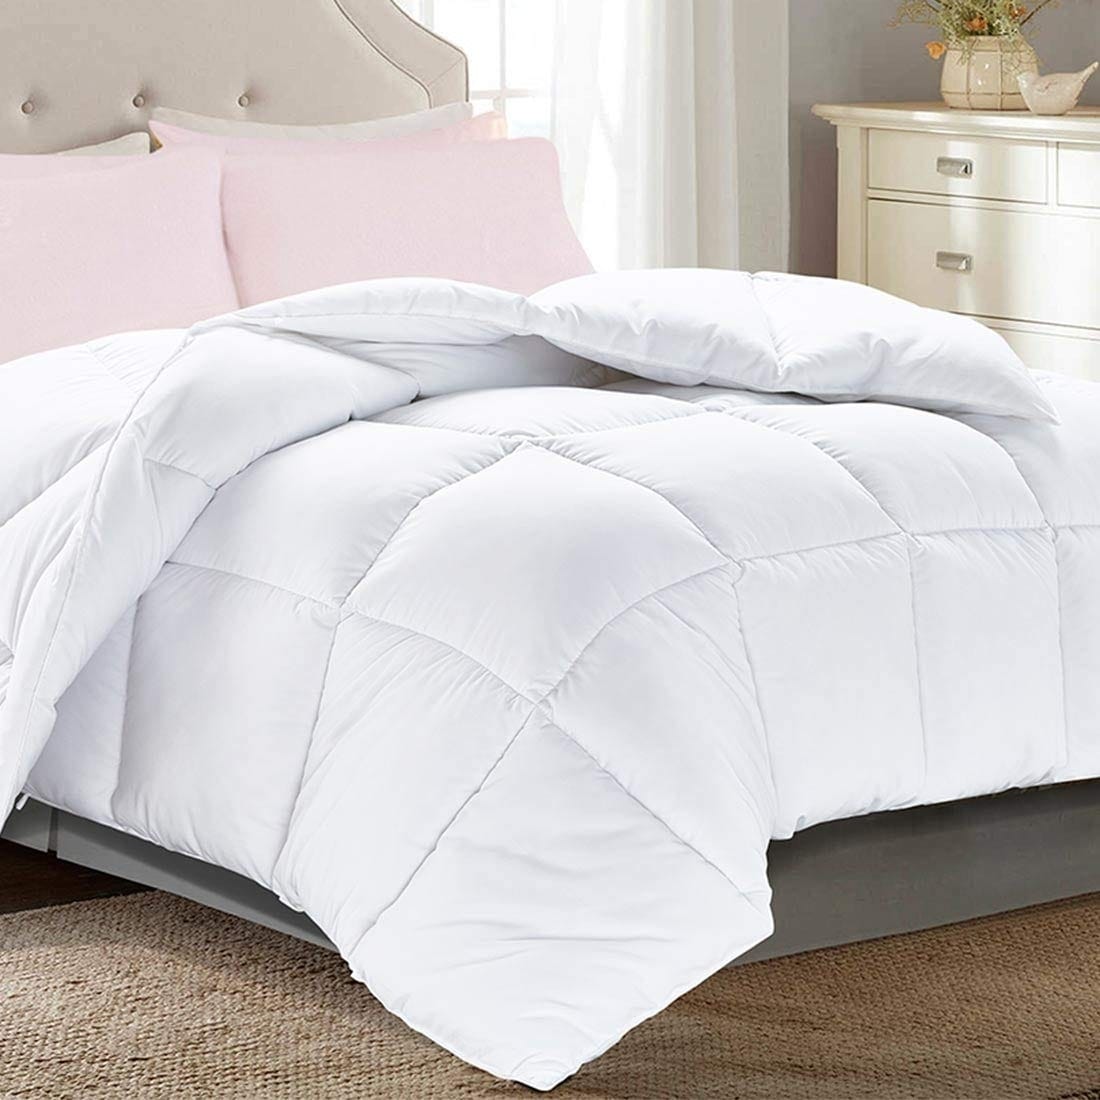 Shop Soft Goose Down Alternative Comforter Puffy Warm Duvet Insert